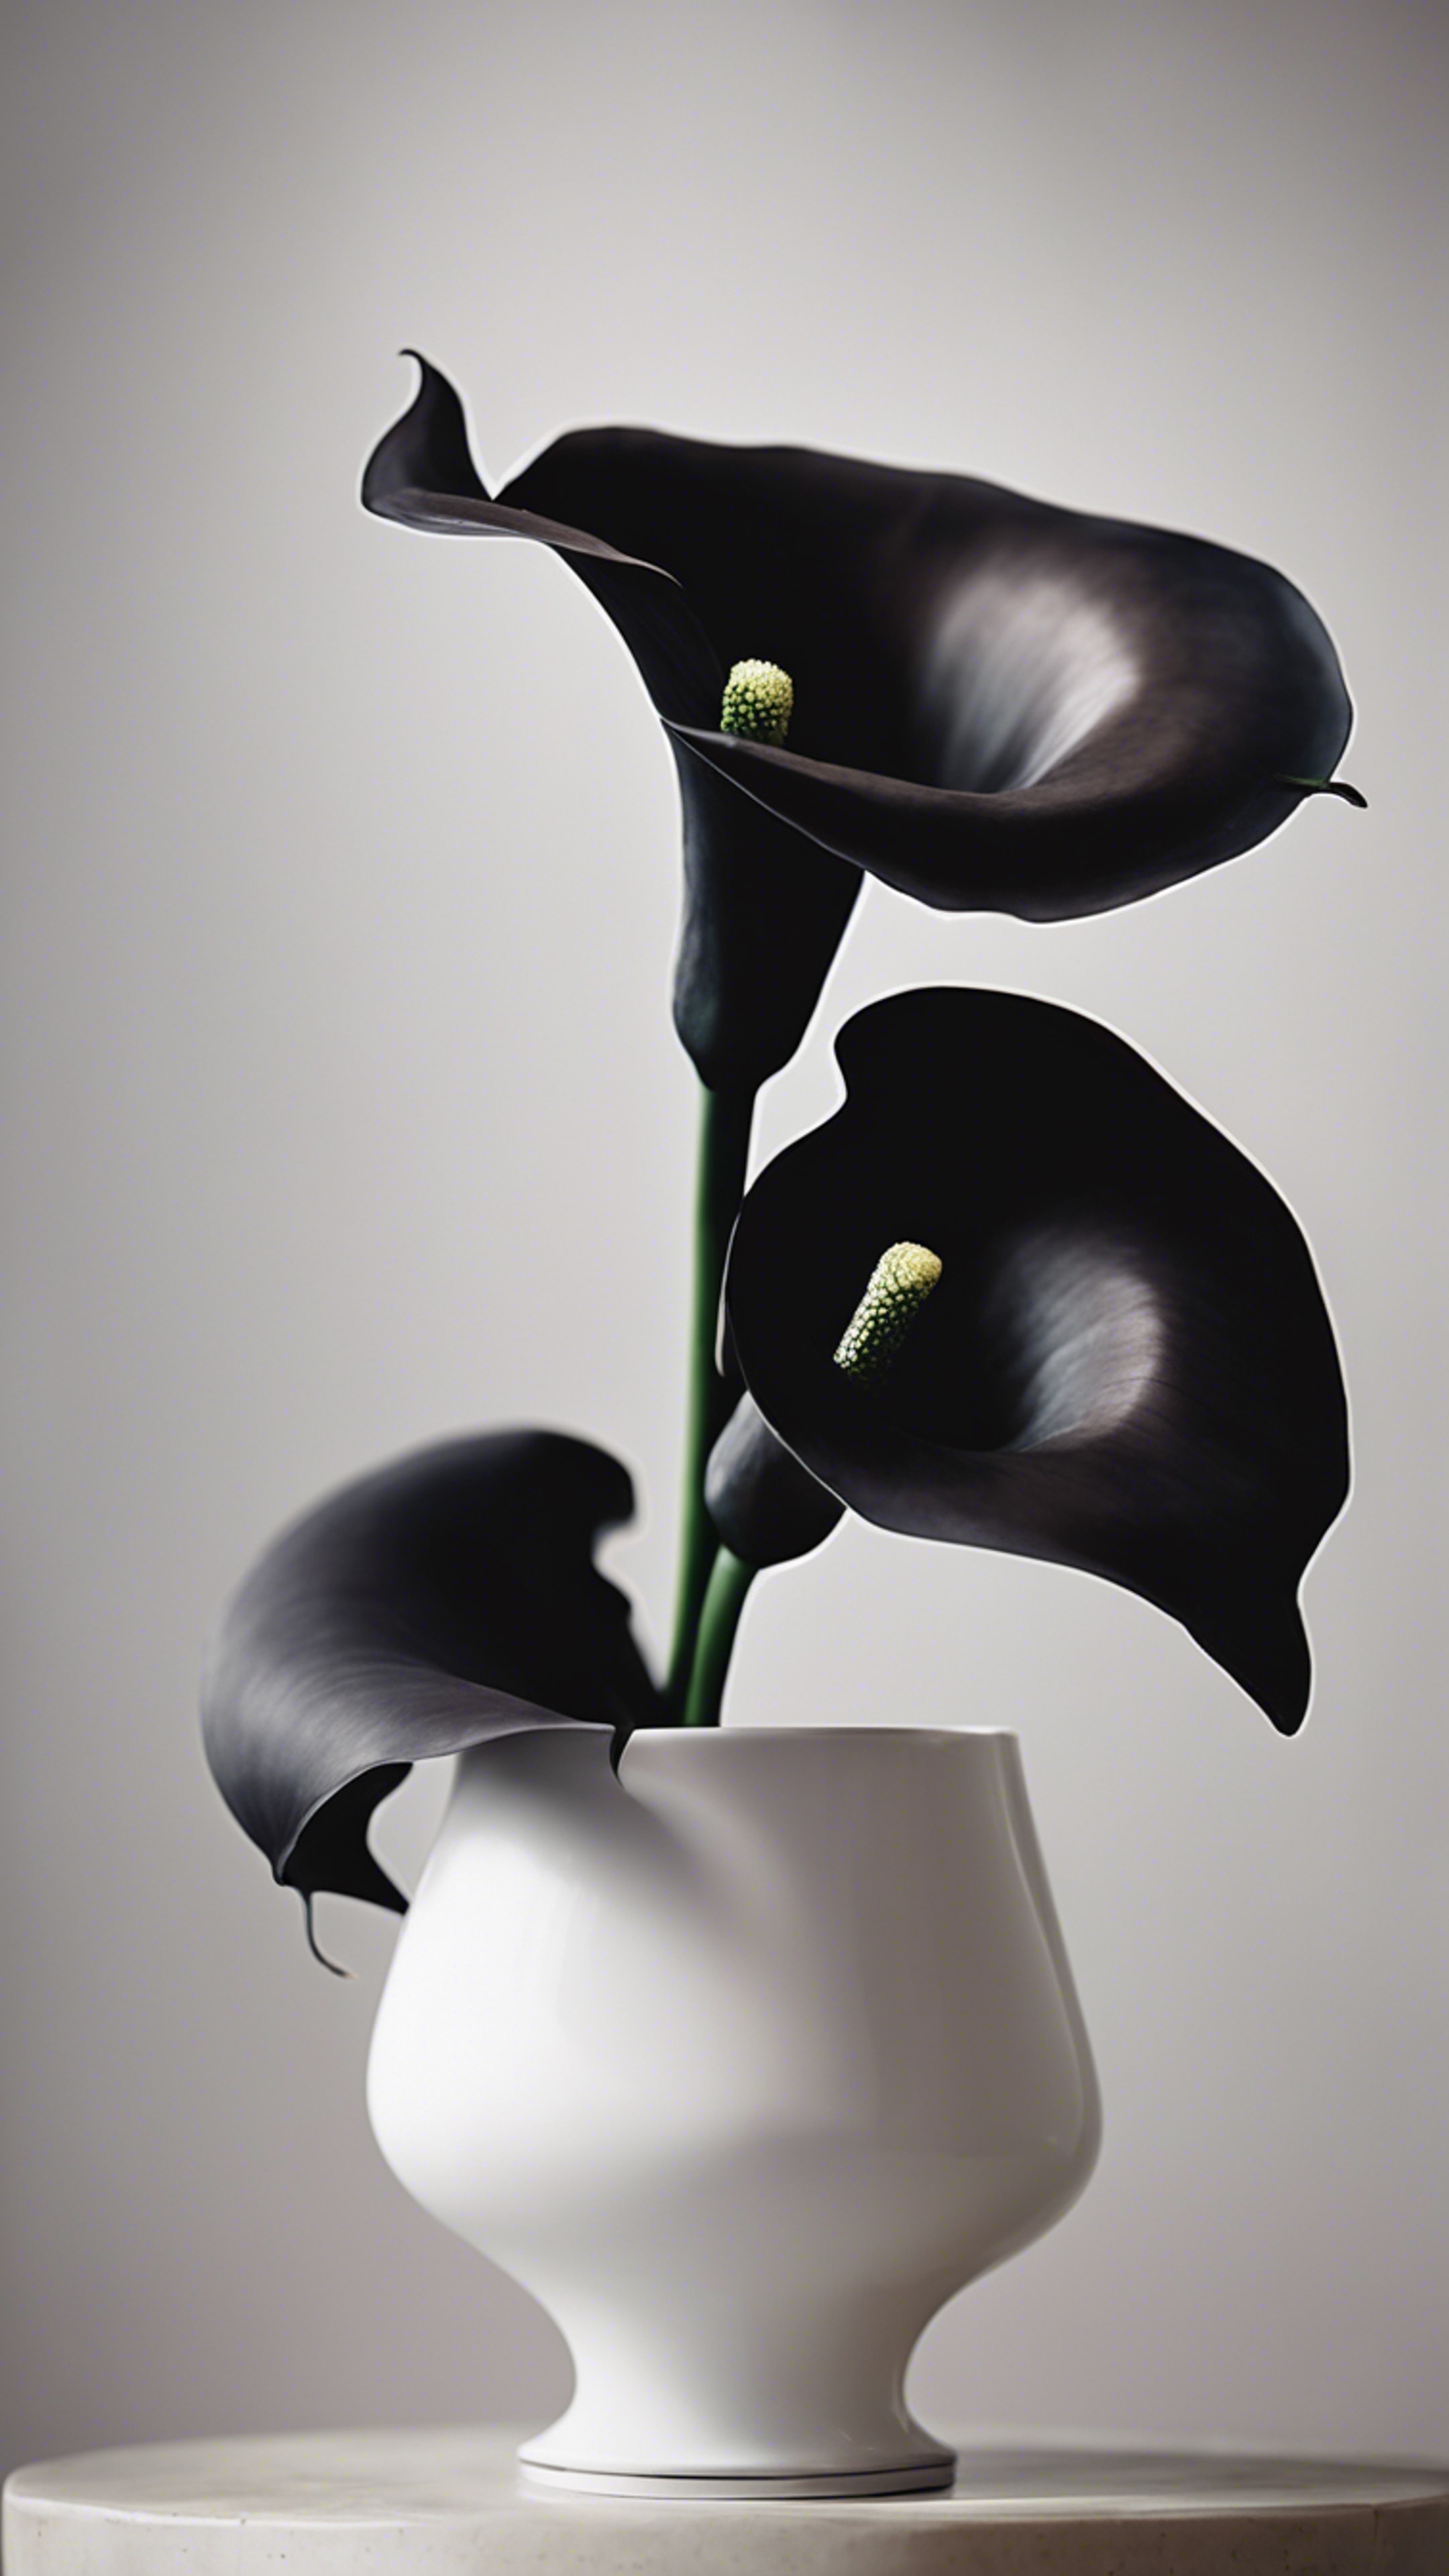 A breathtaking centerpiece featuring a black calla lily in a modern white vase. Tapéta[9d5d01b6790e4db4a8d5]